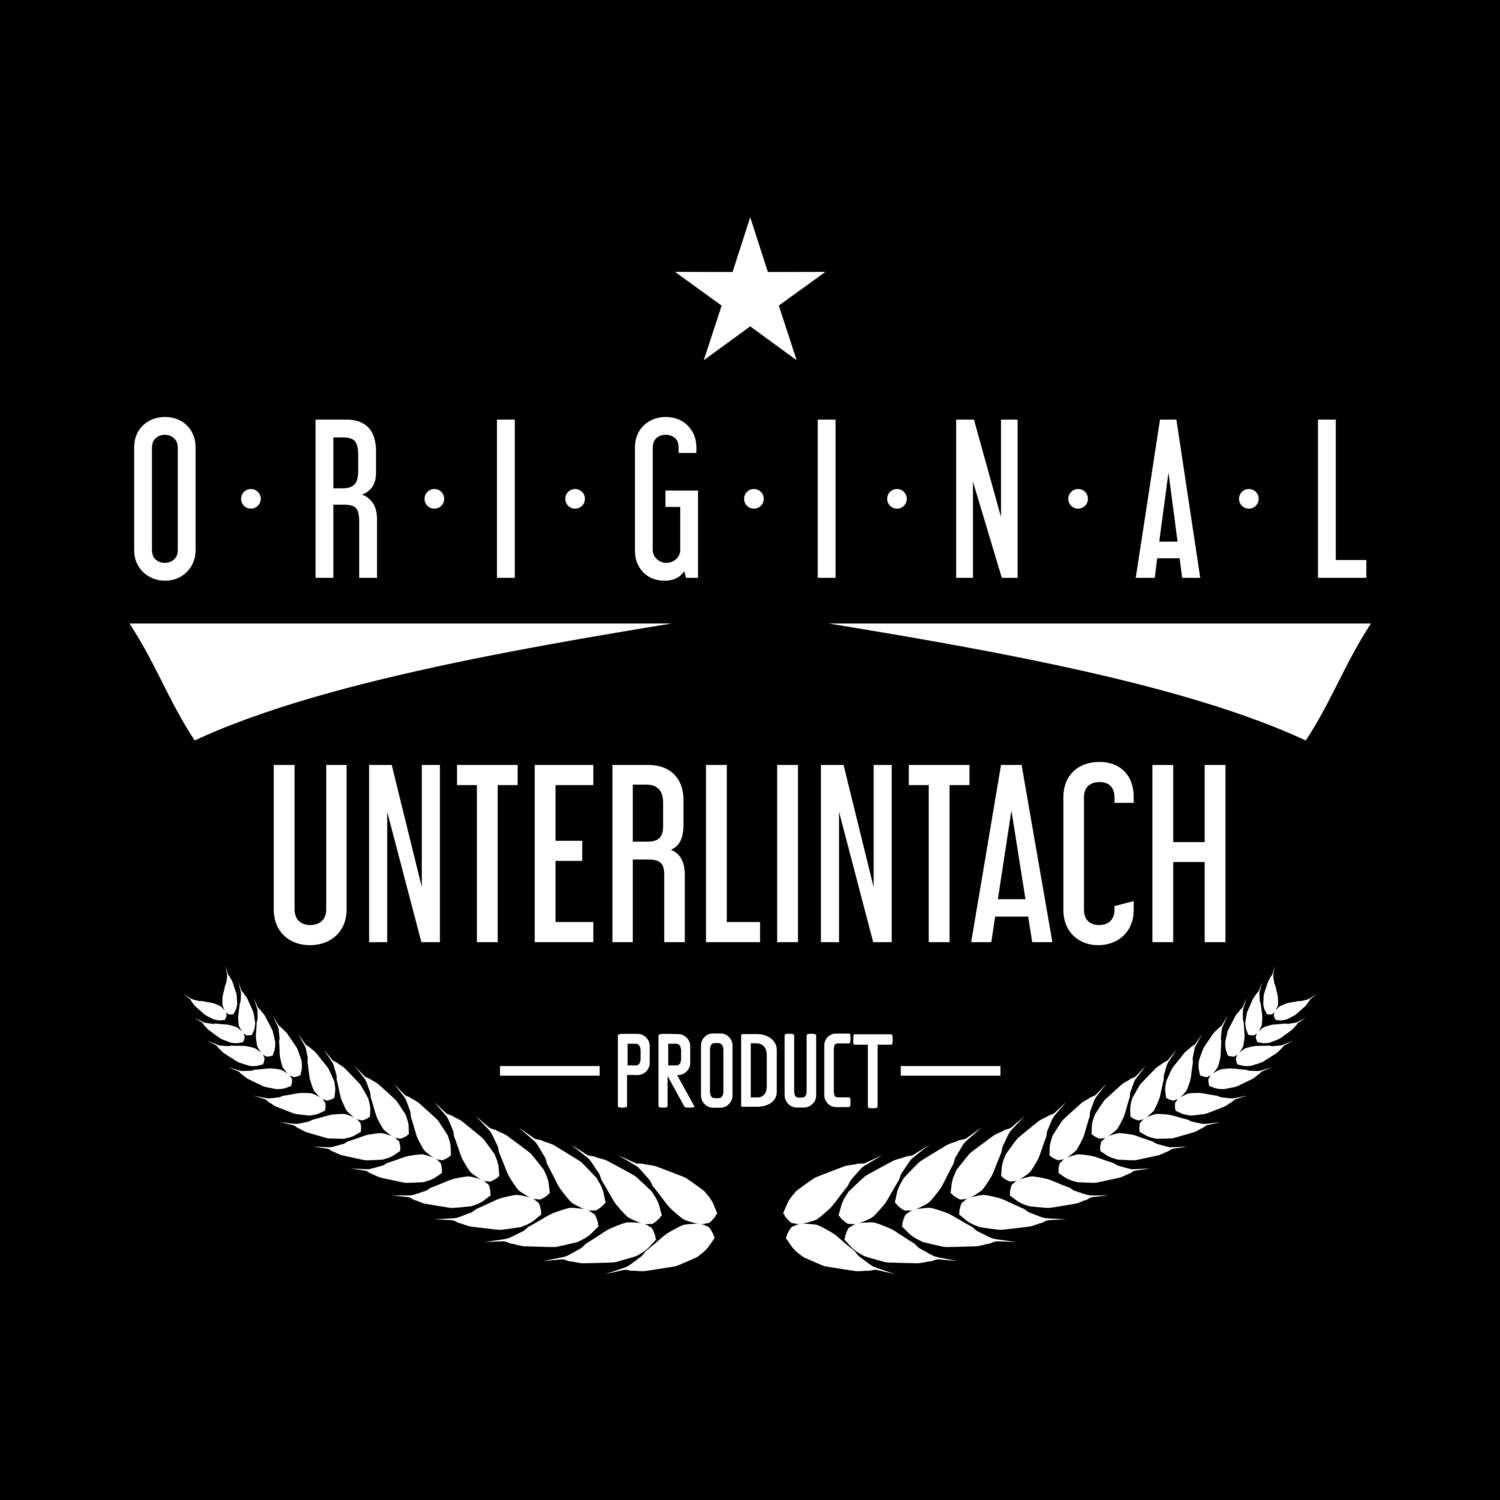 Unterlintach T-Shirt »Original Product«